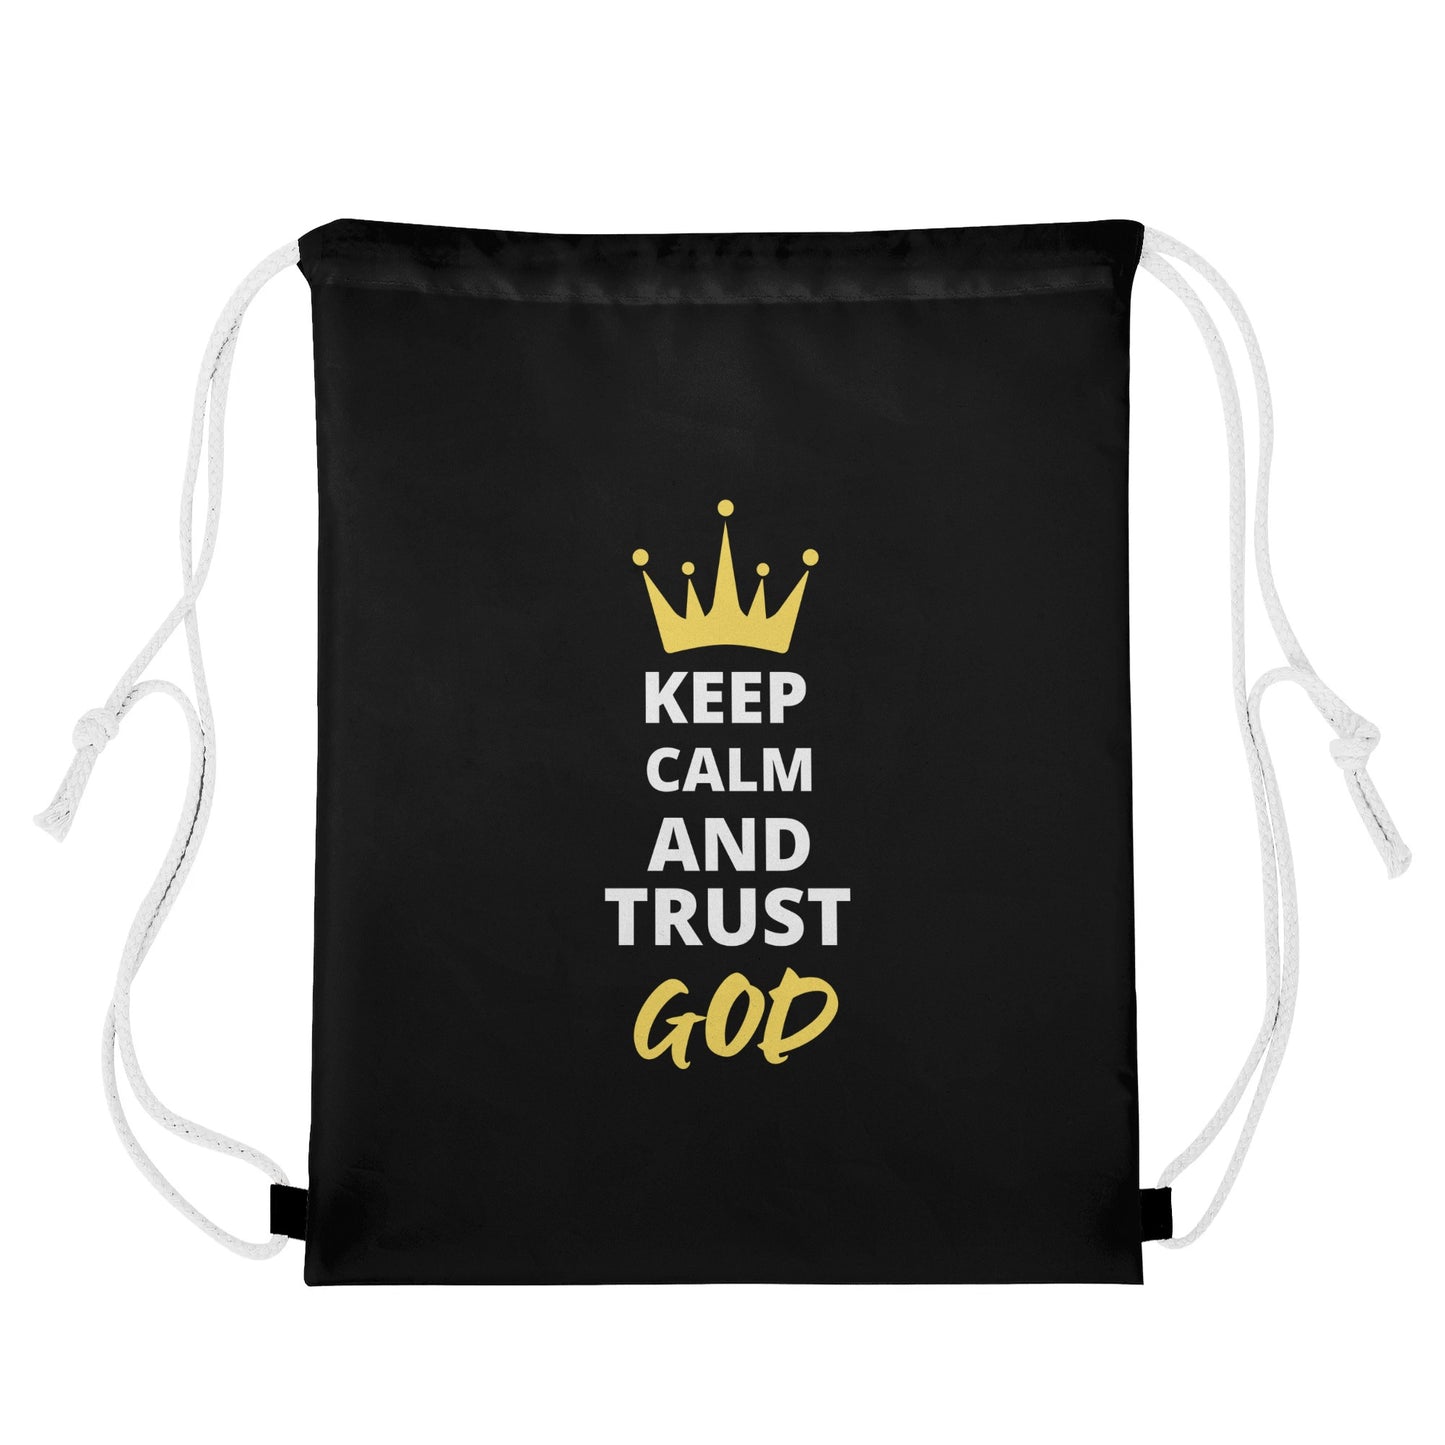 Keep Calm And Trust God Gym Drawstring Bag popcustoms